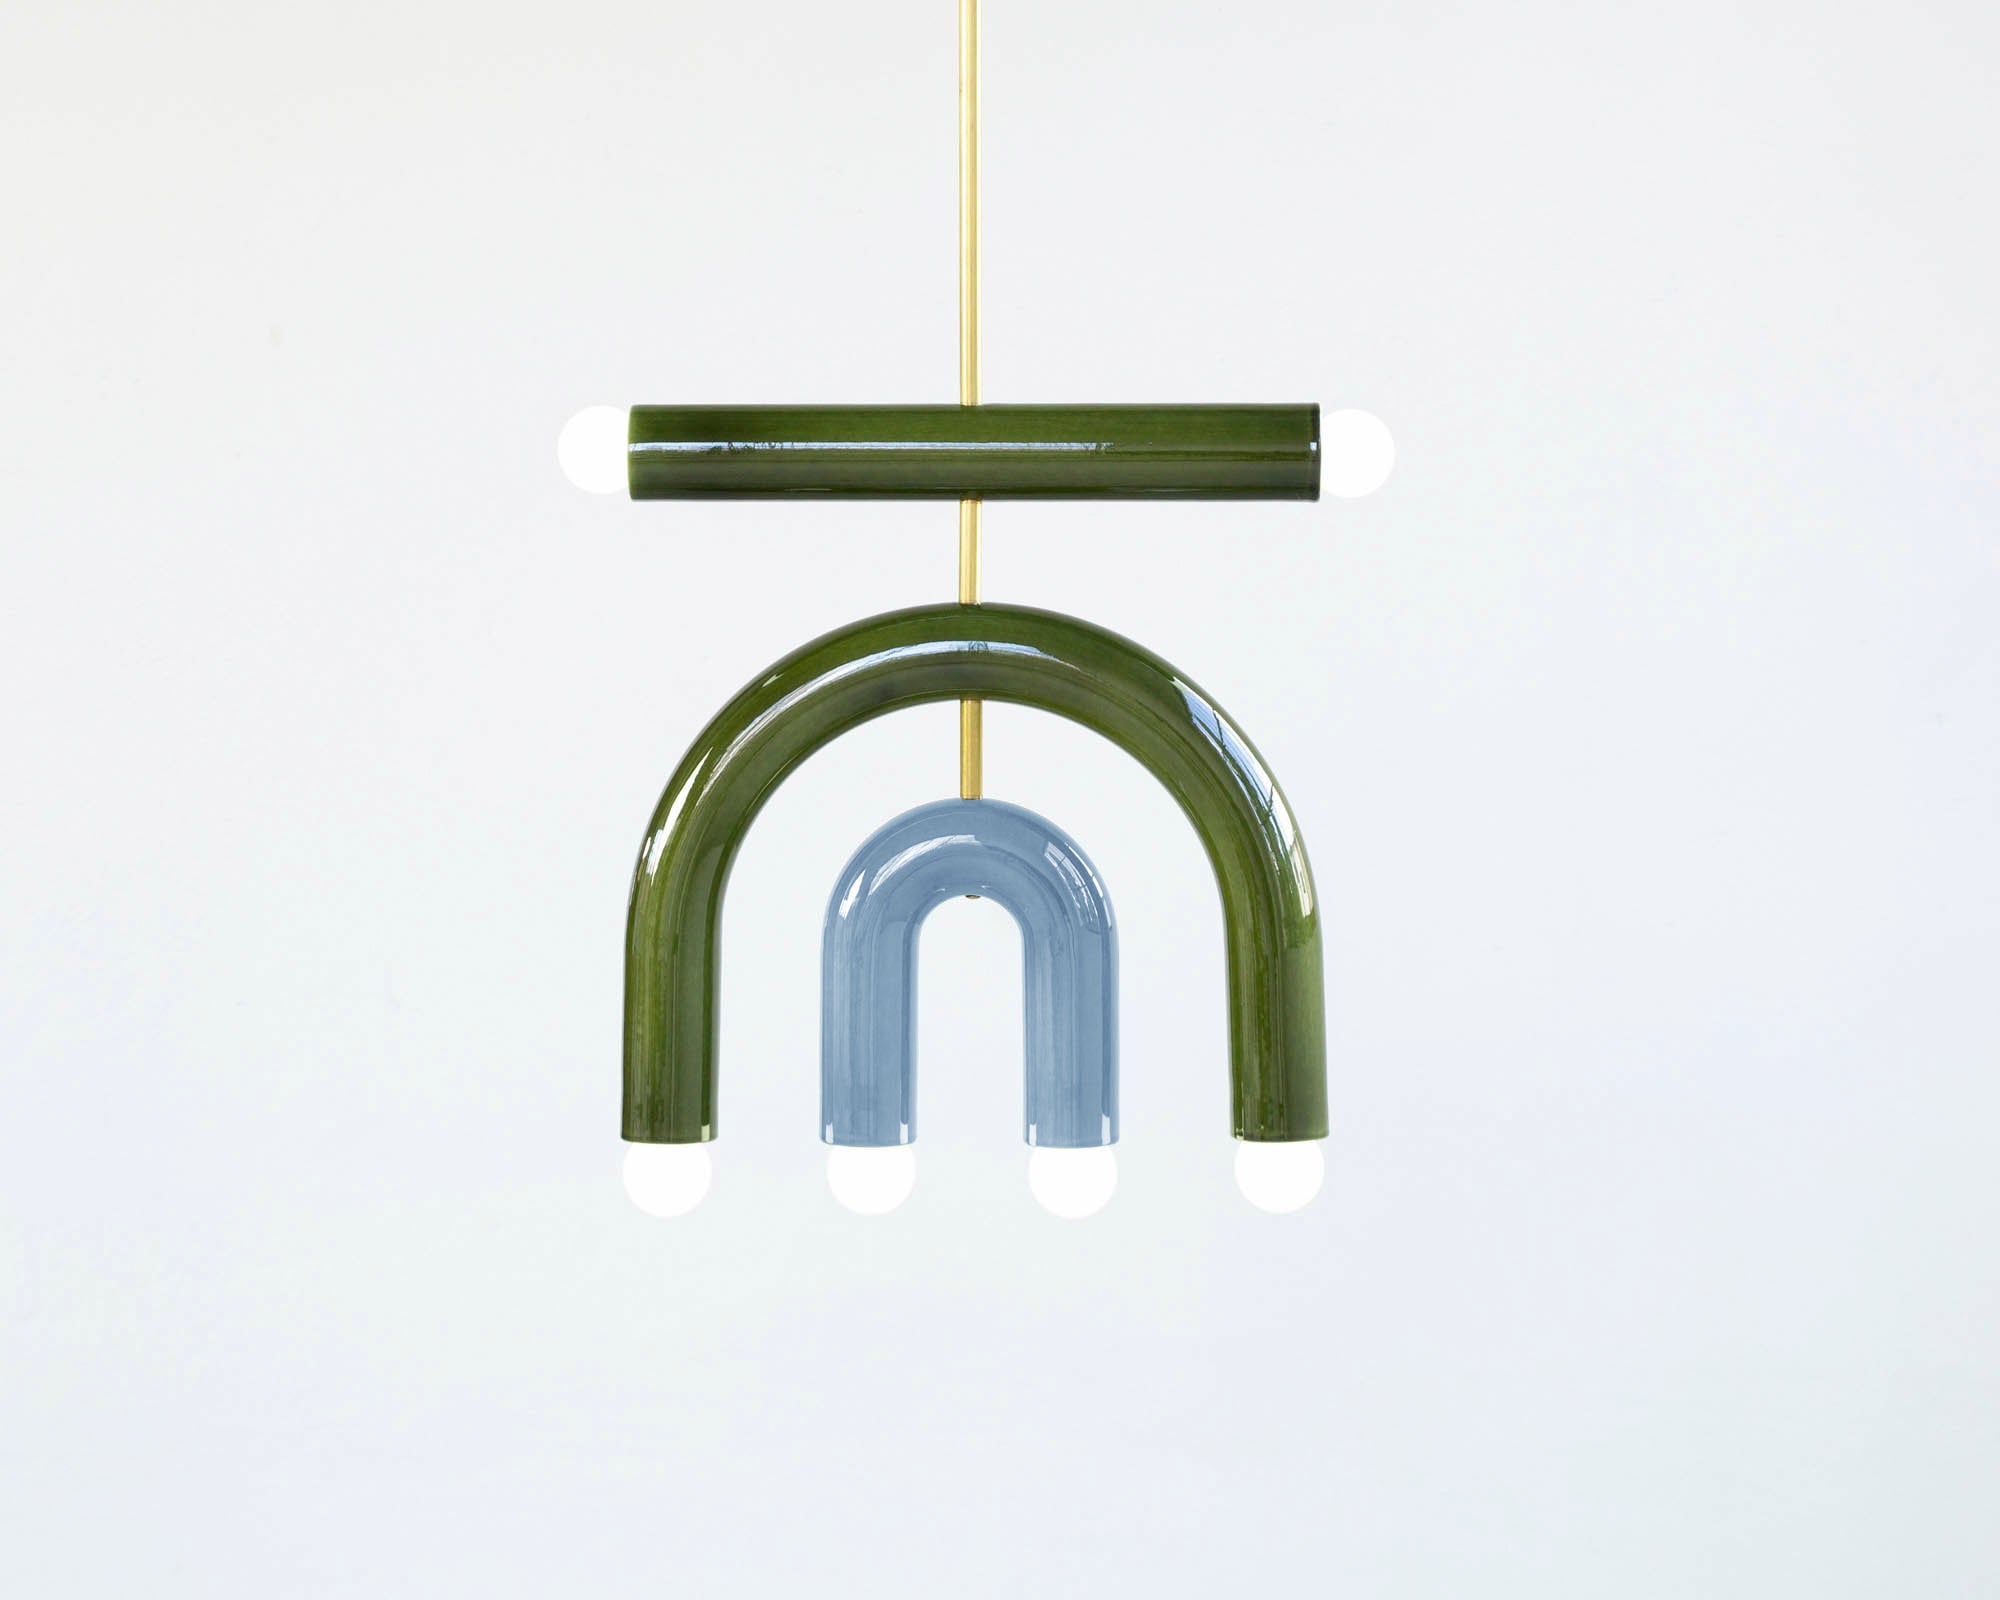 TRN D1 Pendant lamp / ceiling lamp / chandelier 
Designer: Pani Jurek

Dimensions: H 37.5 x 35 x 5 cm
Model shown: Green & light blue

Materials: Hand glazed ceramic and brass
Rod: brass, length made to order - specify desired length
Canopy: